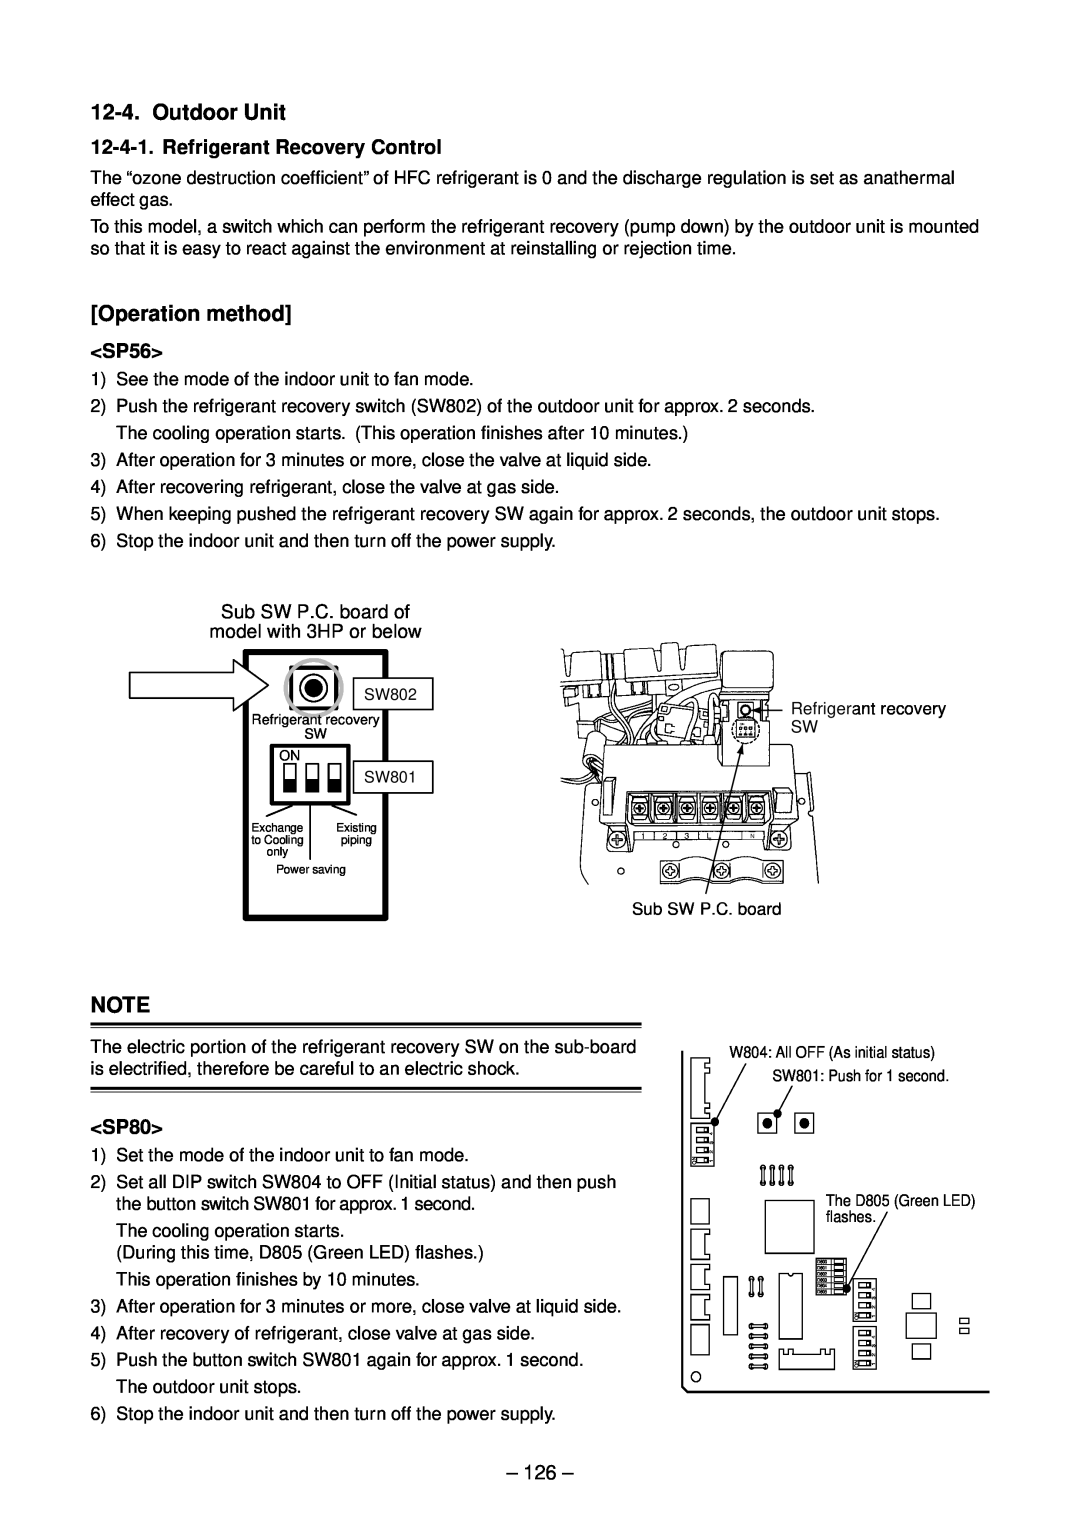 Toshiba RAV-SP804ATZG-E, RAV-SP804ATZ-E, RAV-SP804AT-E Outdoor Unit, Operation method, Refrigerant Recovery Control, SP56 